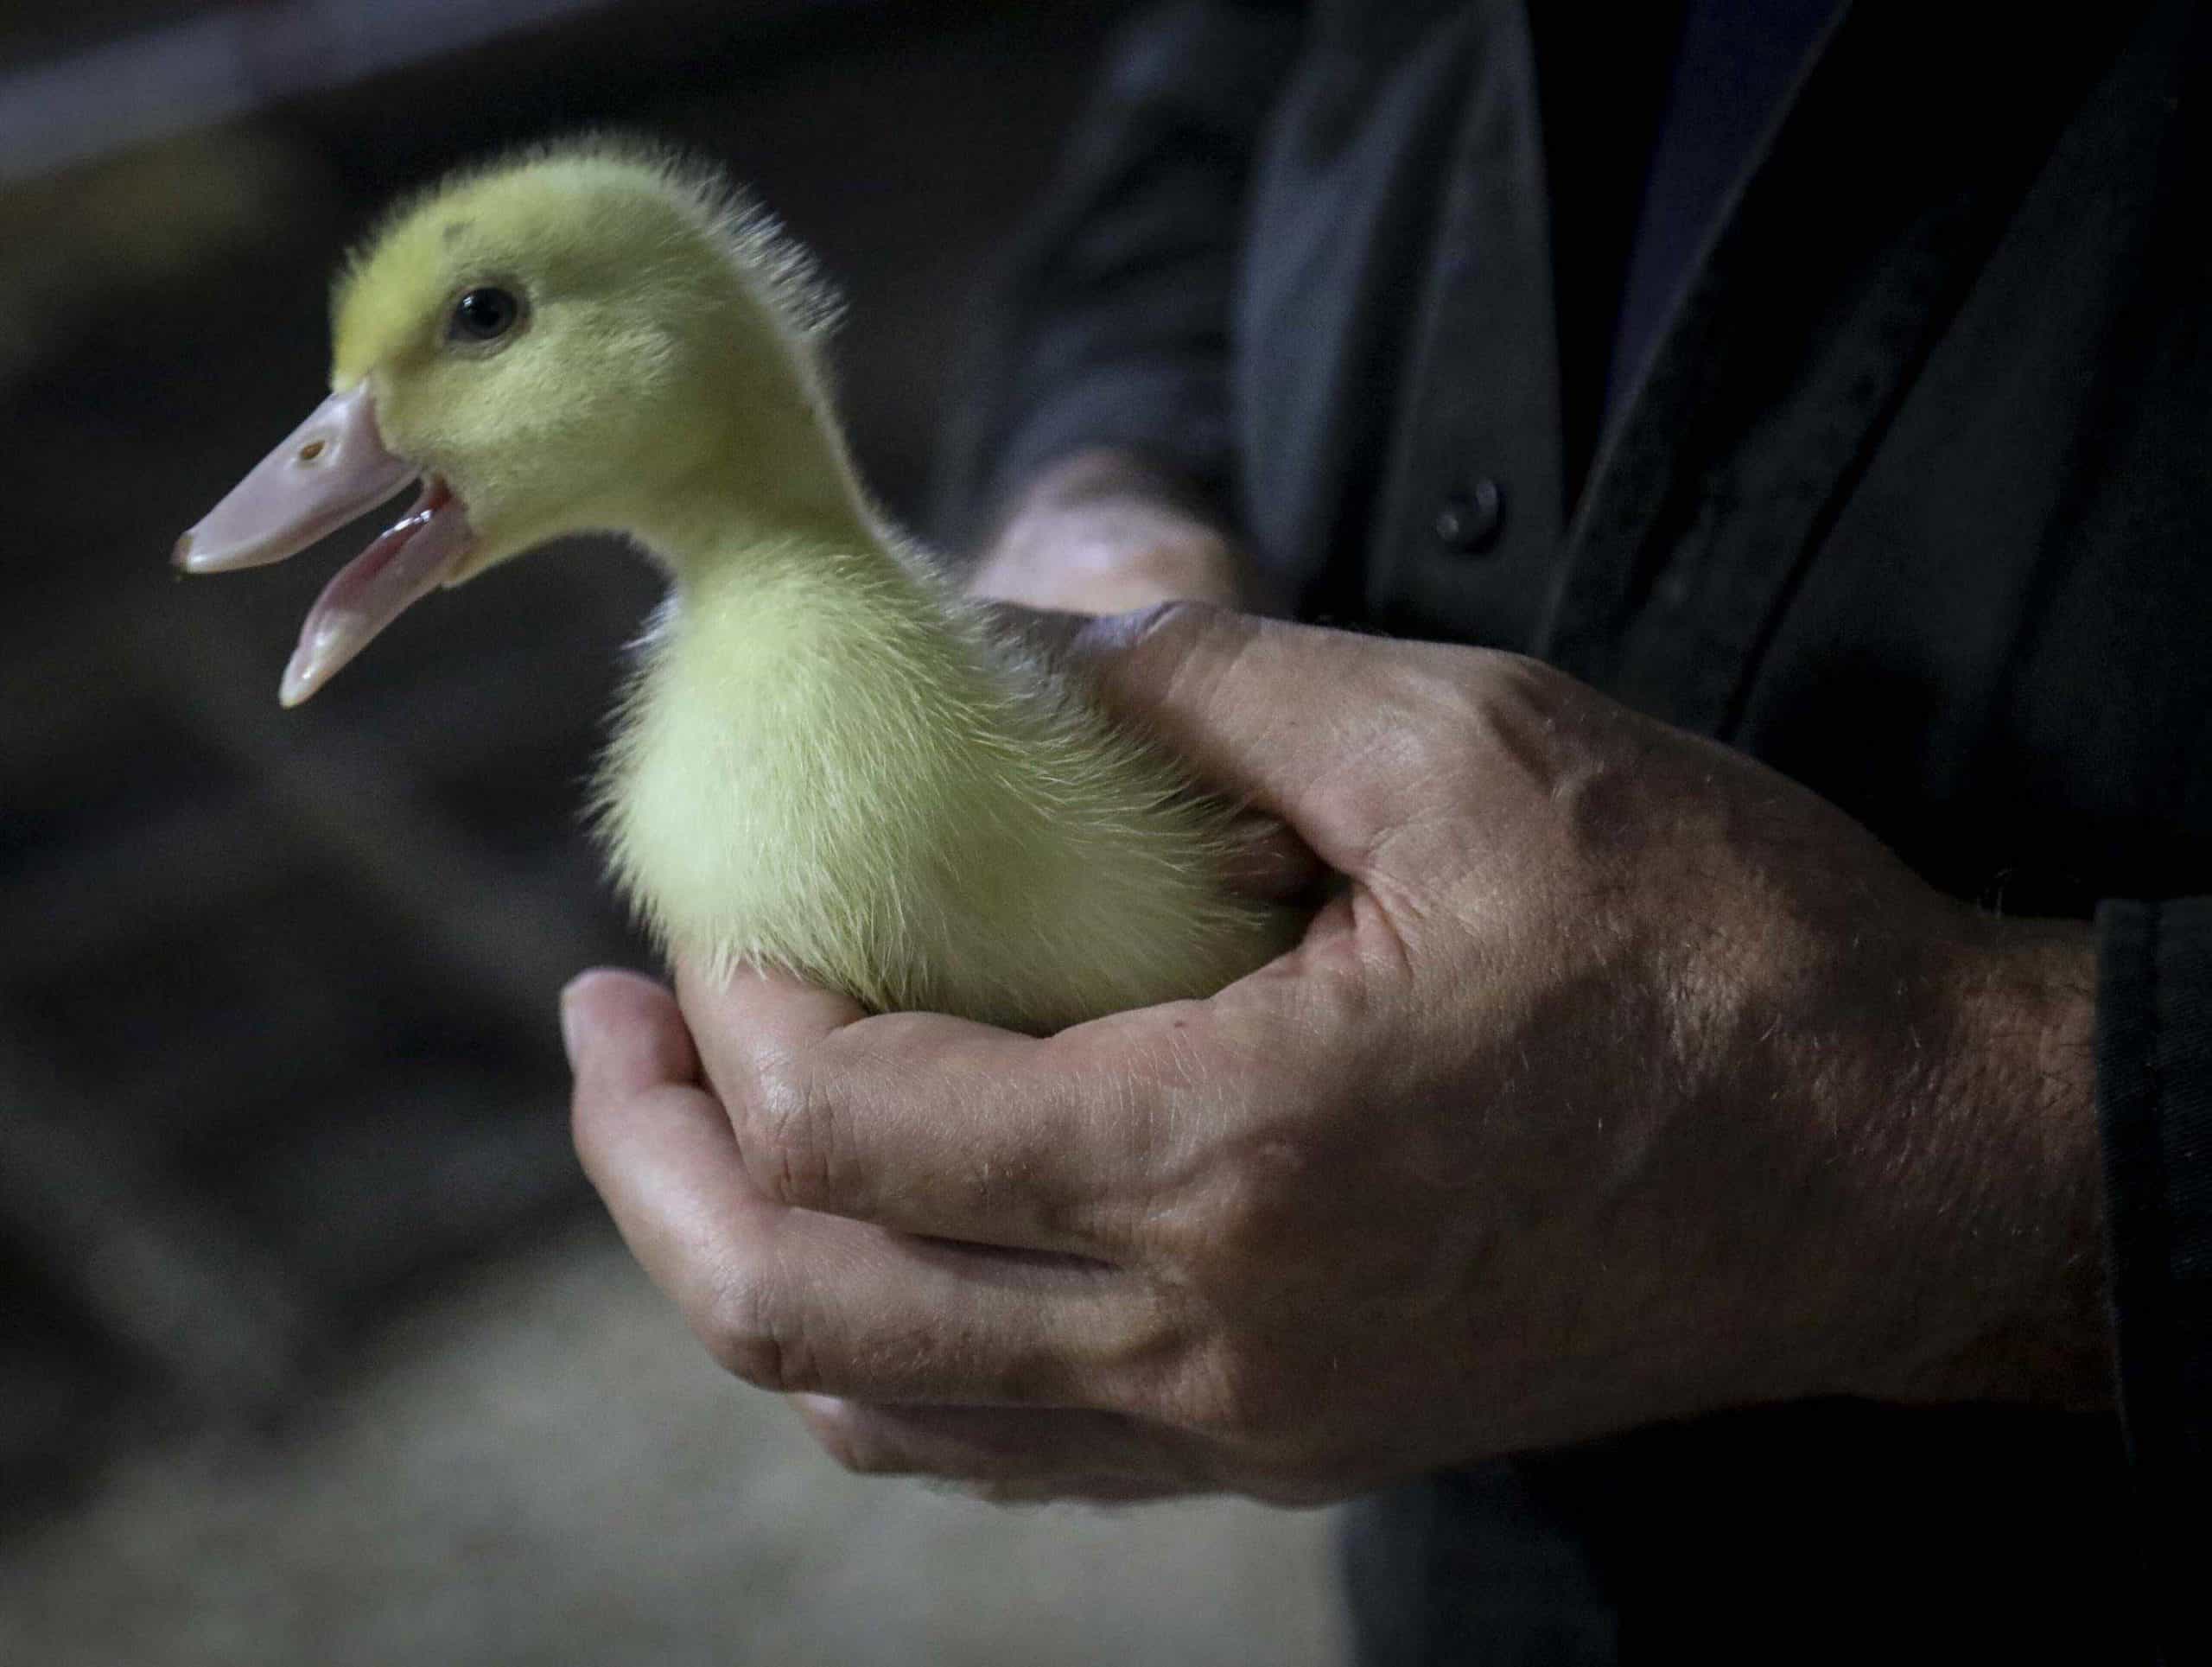 New York City to vote on banning foie gras